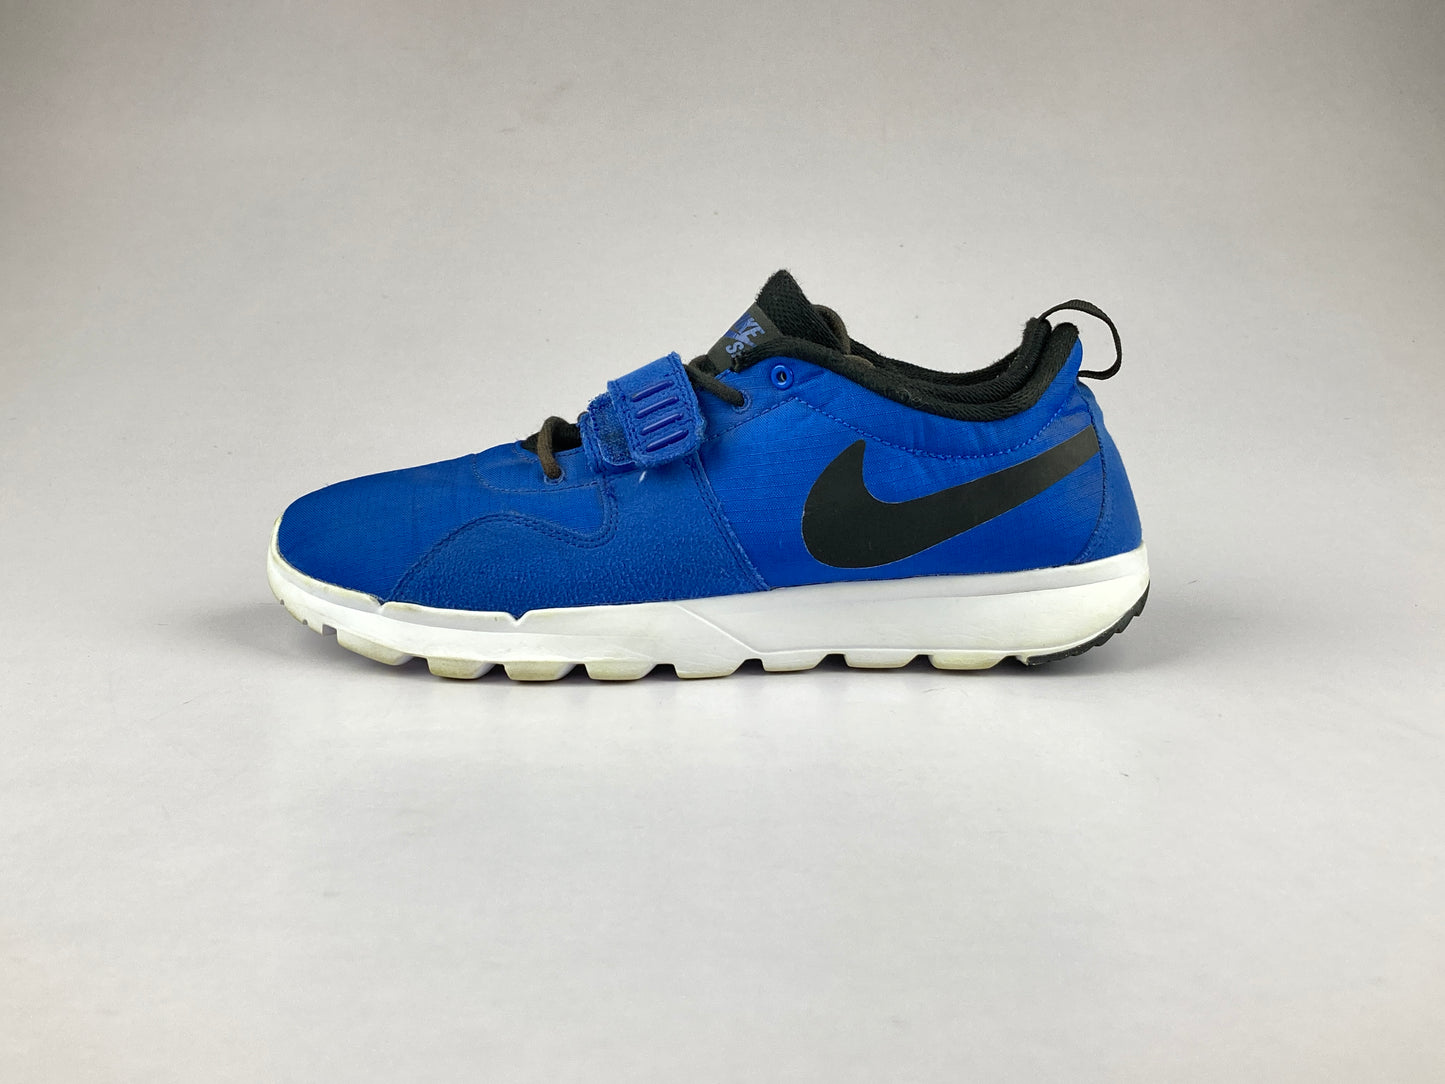 Nike SB Trainerendor Low 'Blue/Black' 616575-401